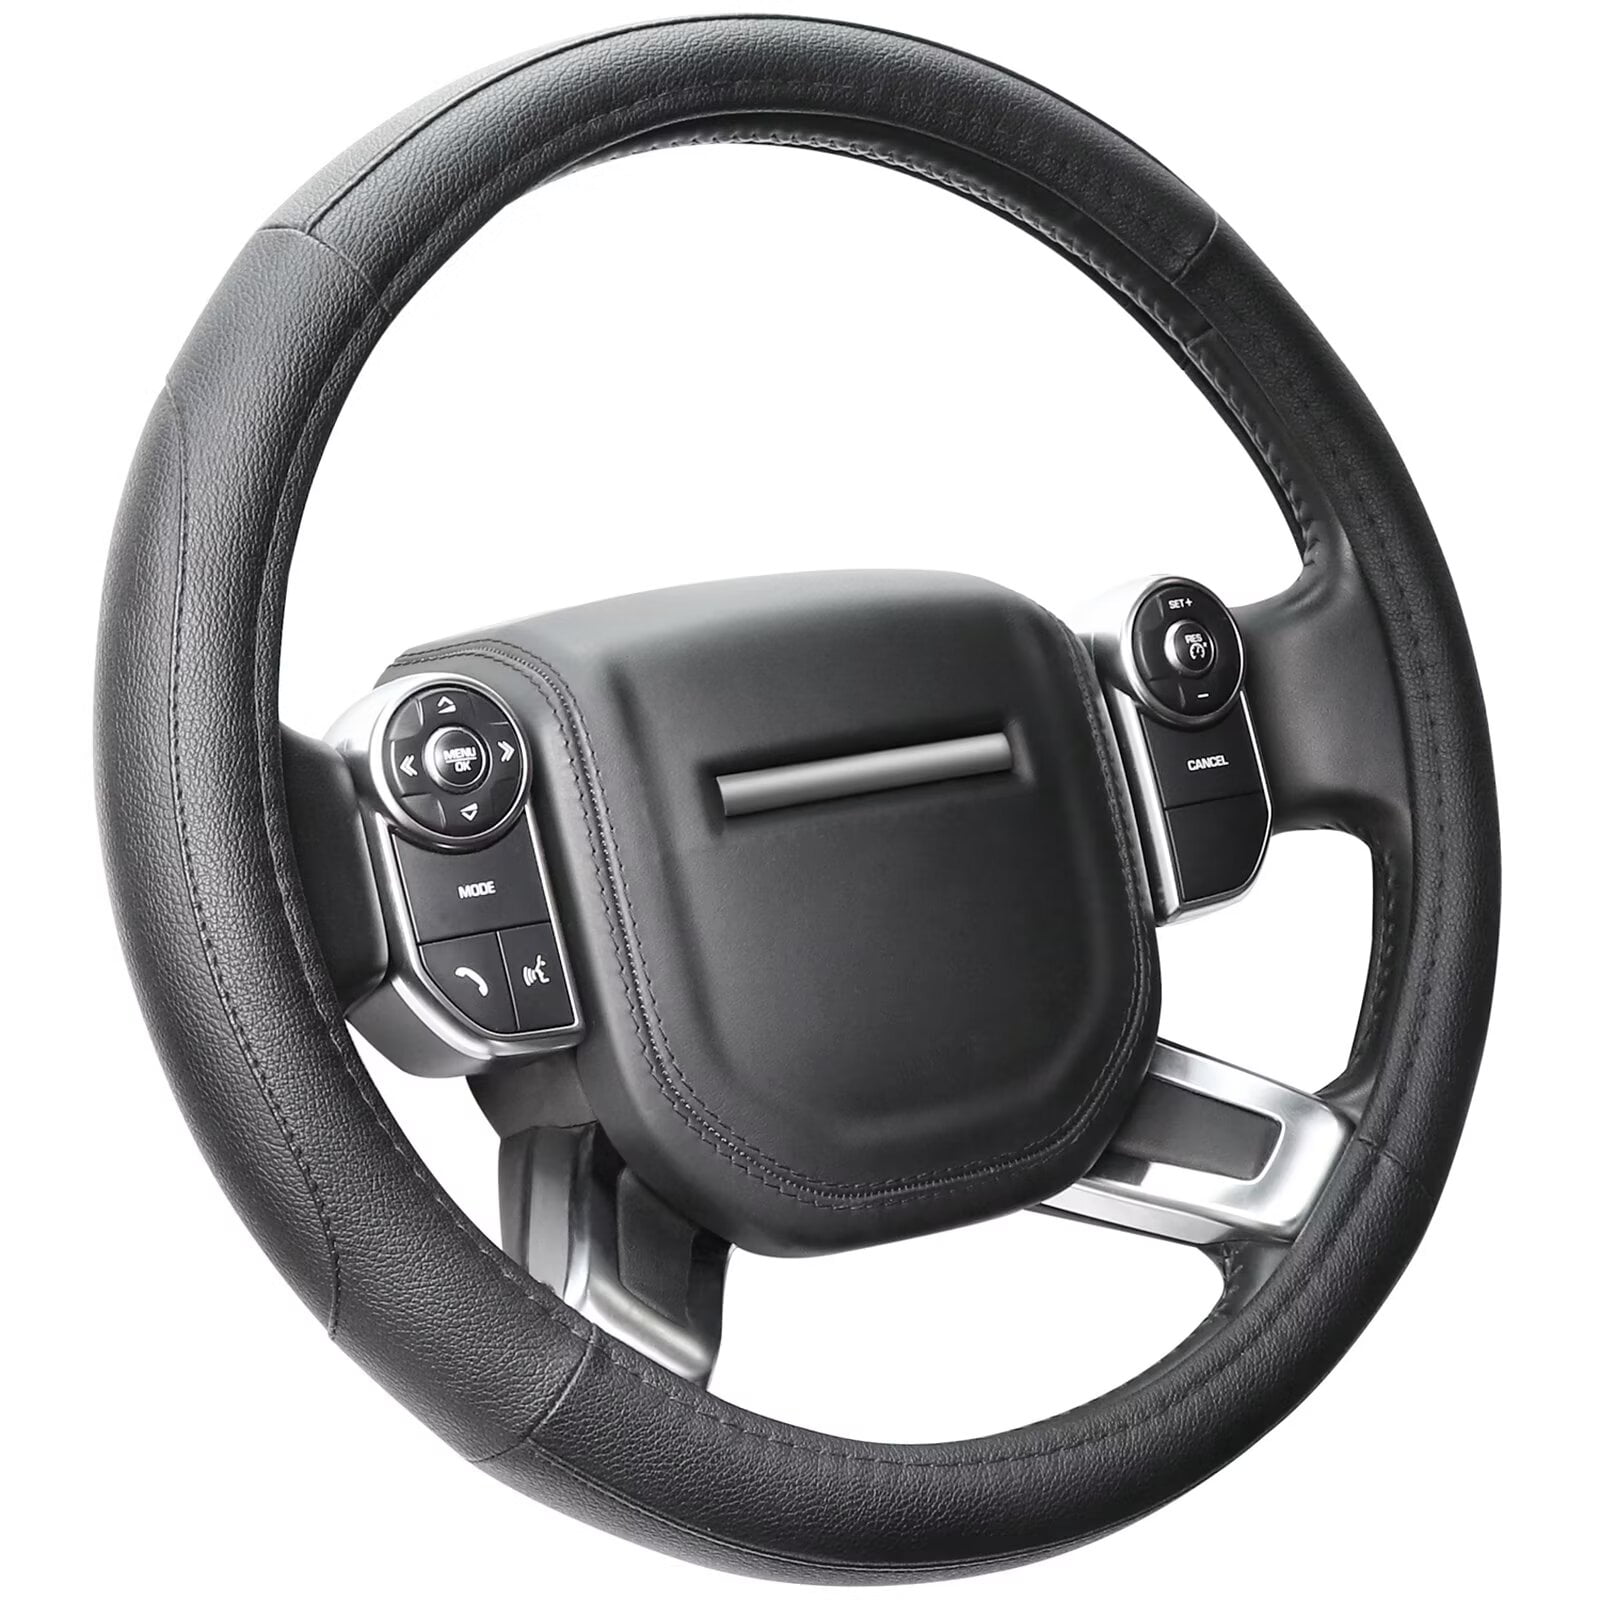 TRUE LINE Automotive TrueLine® Portable Steering Wheel Table Attachment for  Eating Laptop ipad Desk (Gray)